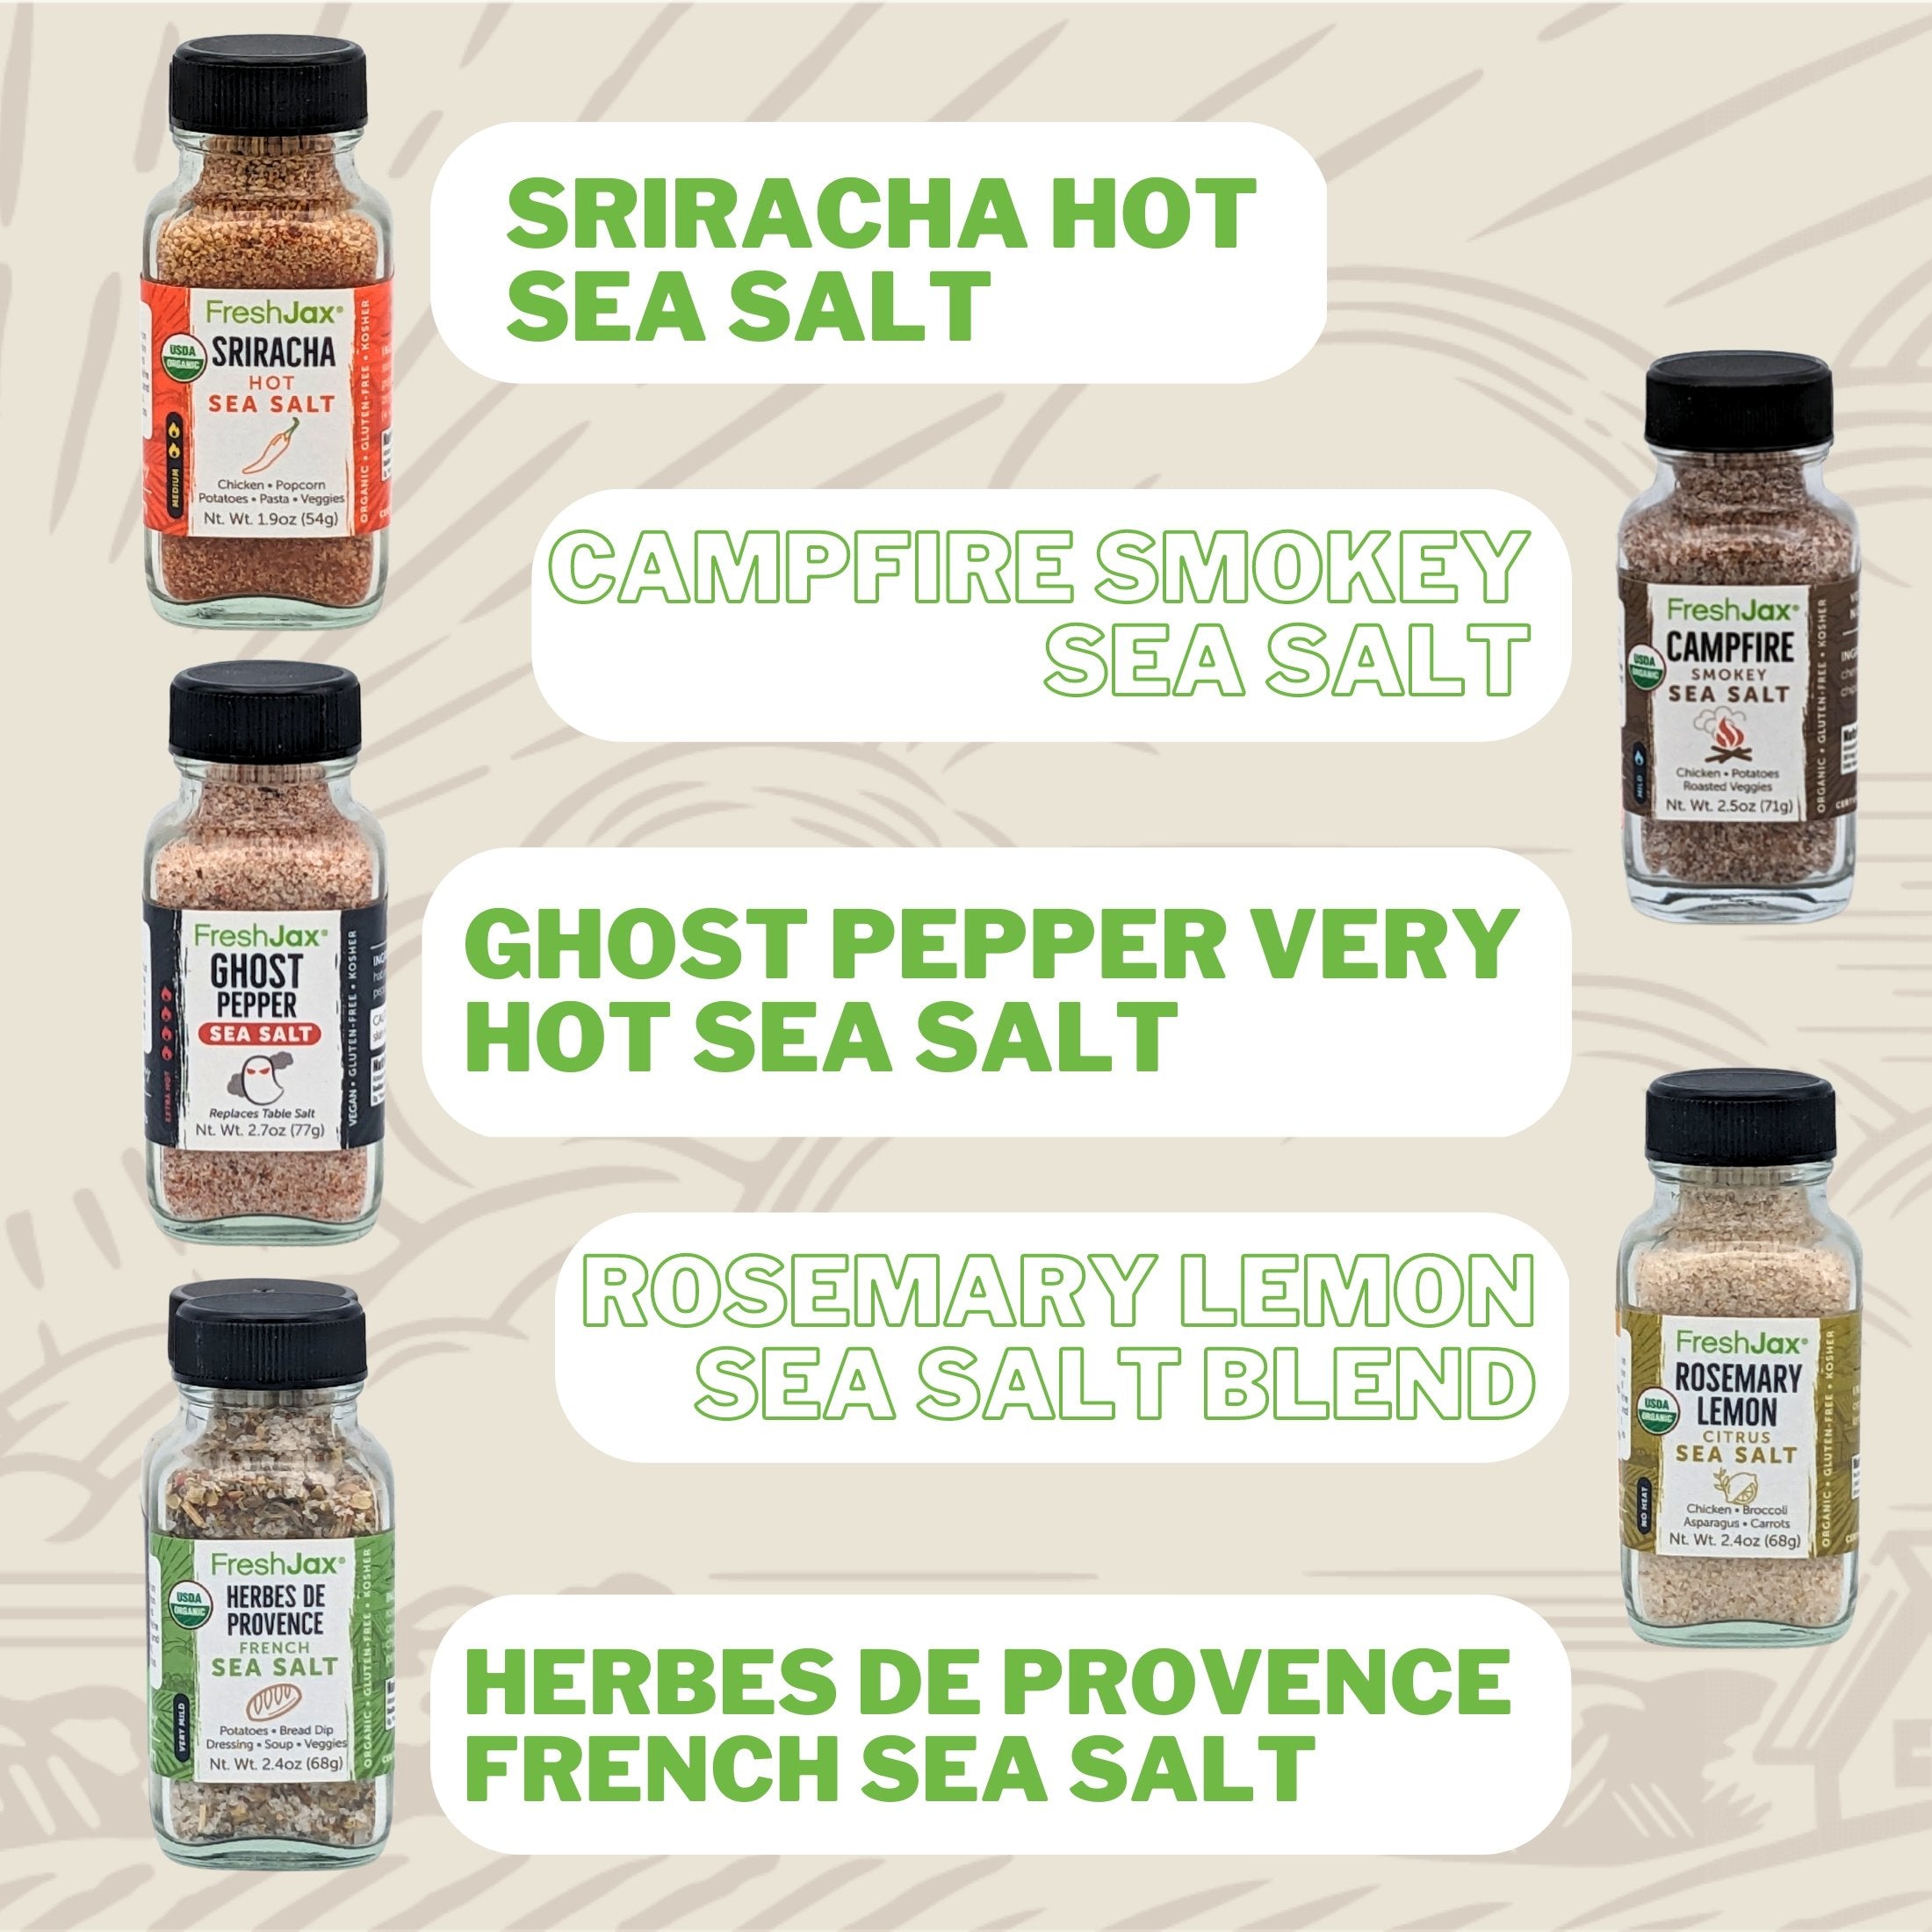 Sriracha Hot Sea Salt, Campfire Smokey Sea Salt, Ghost Pepper Very Hot Sea Salt, Rosemary Lemon Sea Salt Blend, Herbes de Provence French Sea Salt